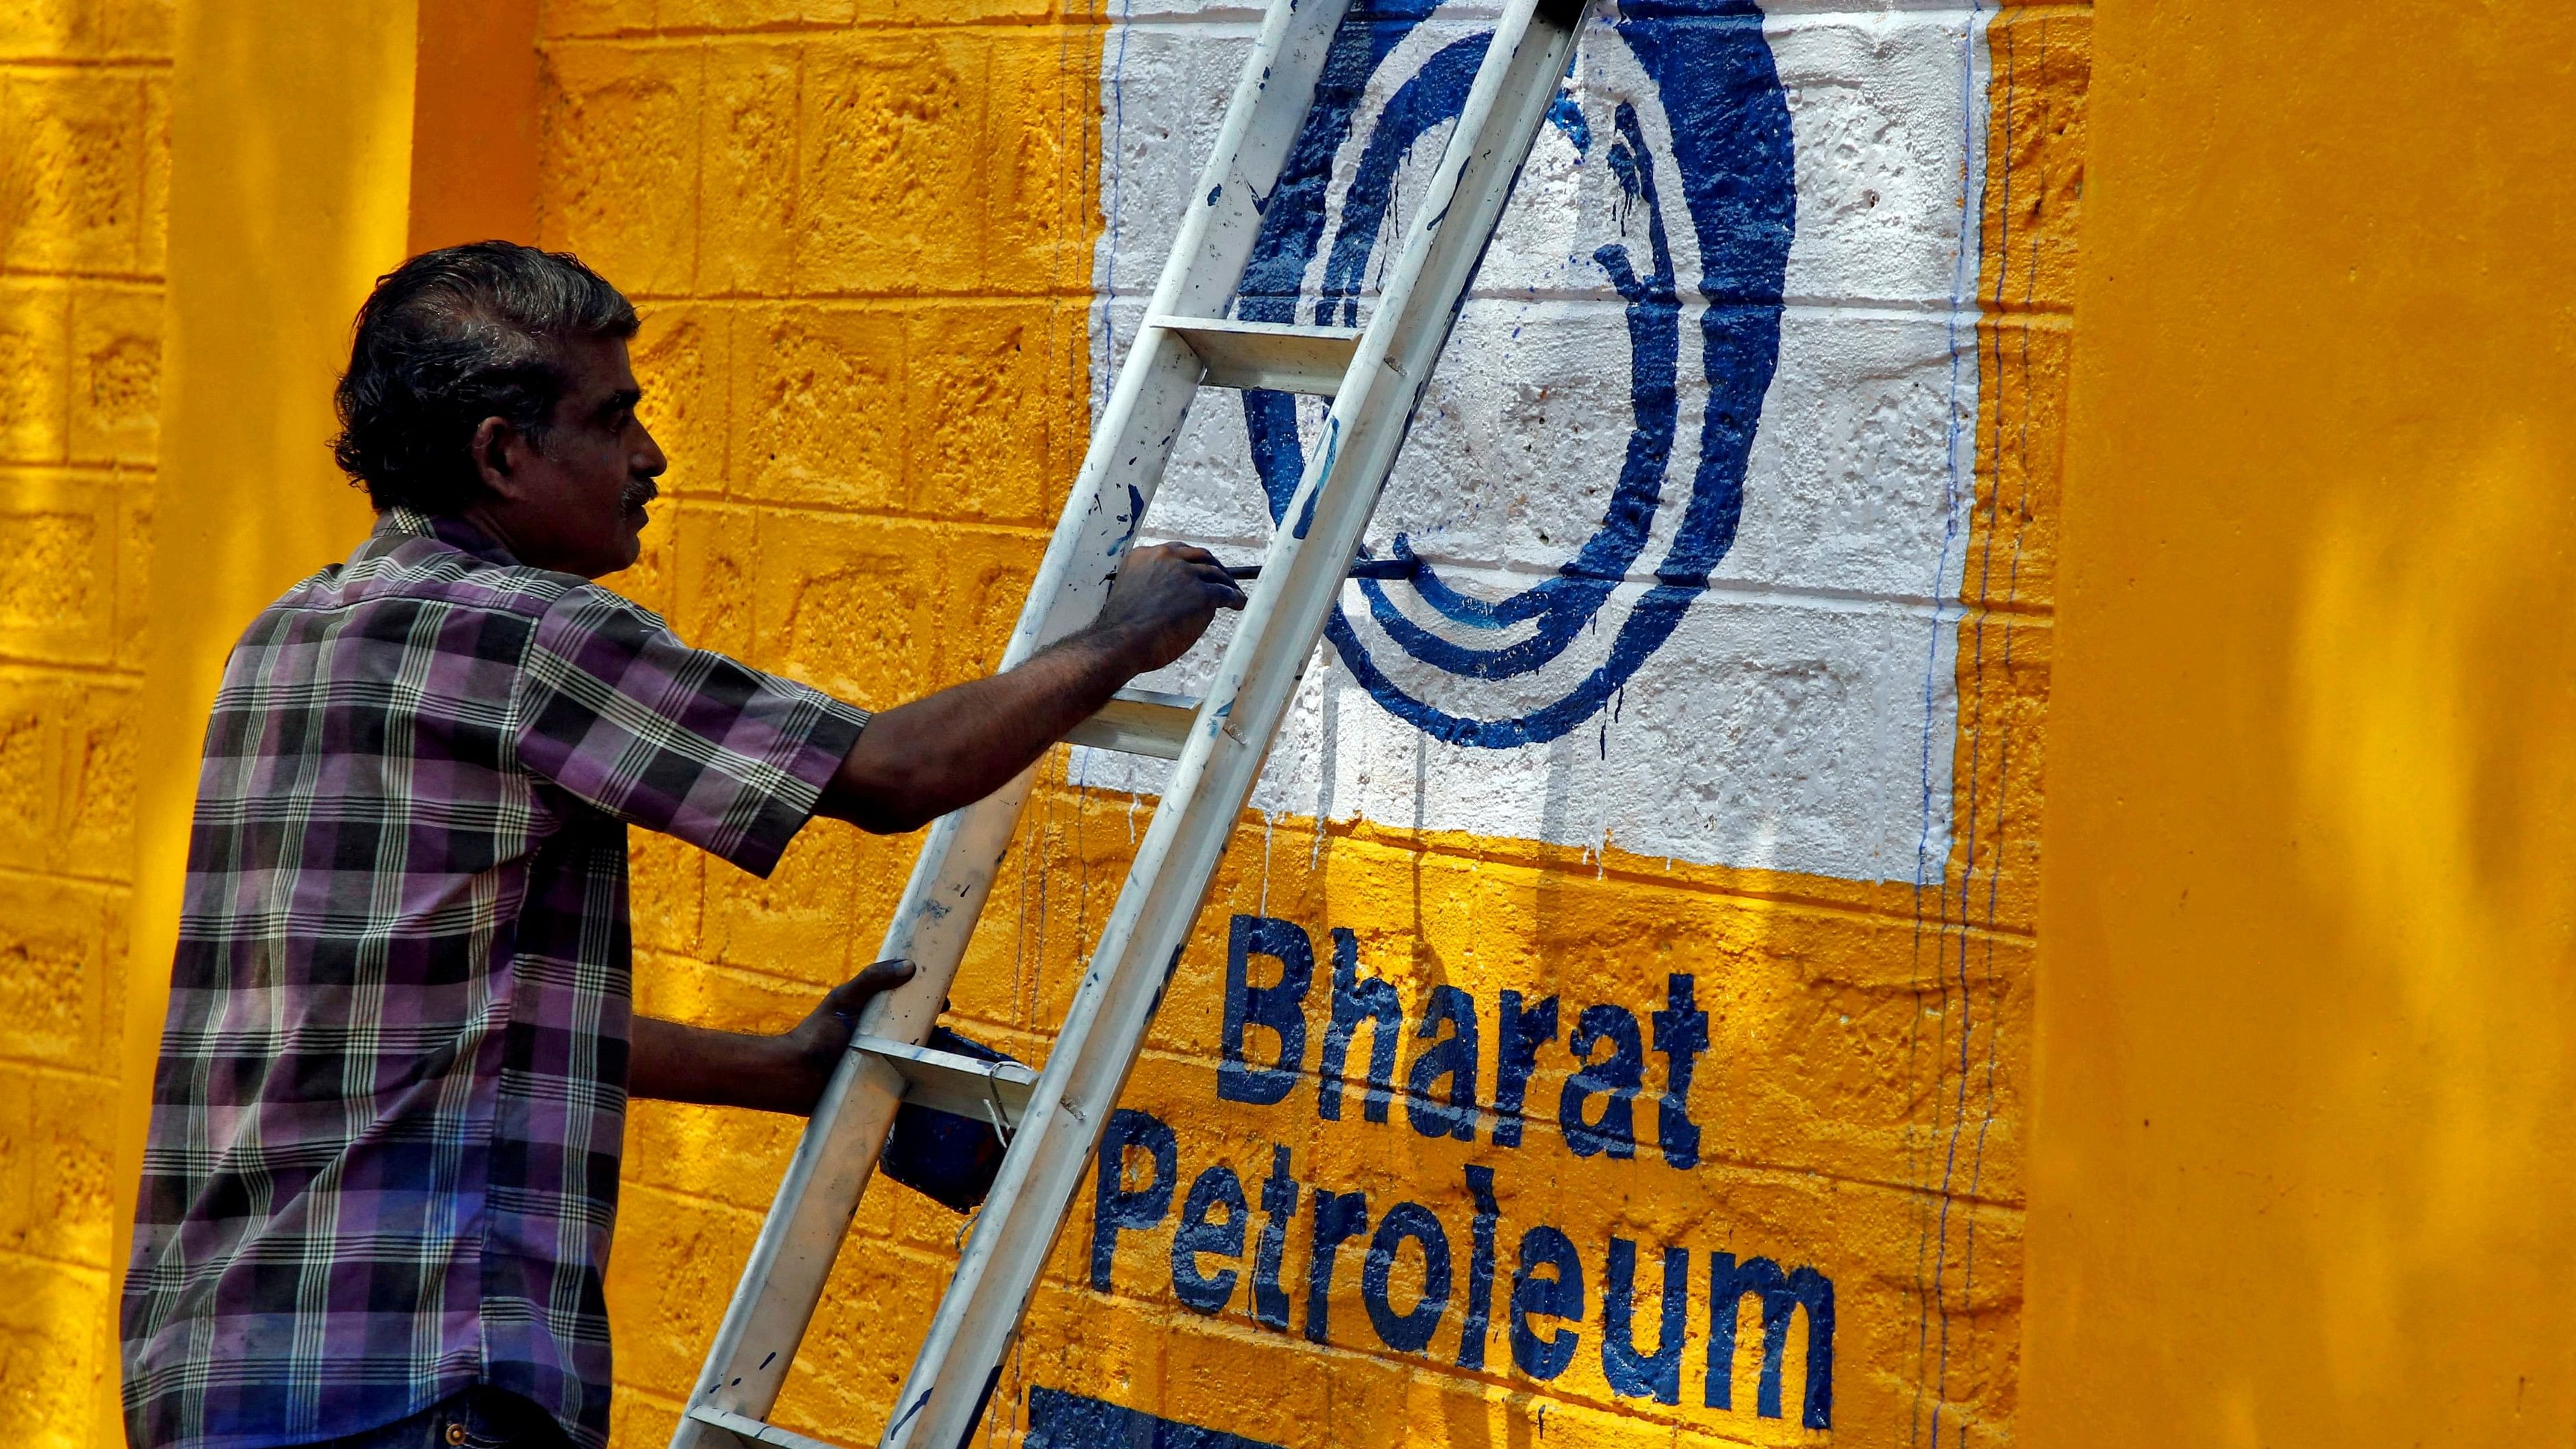 <div class="paragraphs"><p>A man paints the logo of oil refiner Bharat Petroleum Corp on a wall.</p></div>